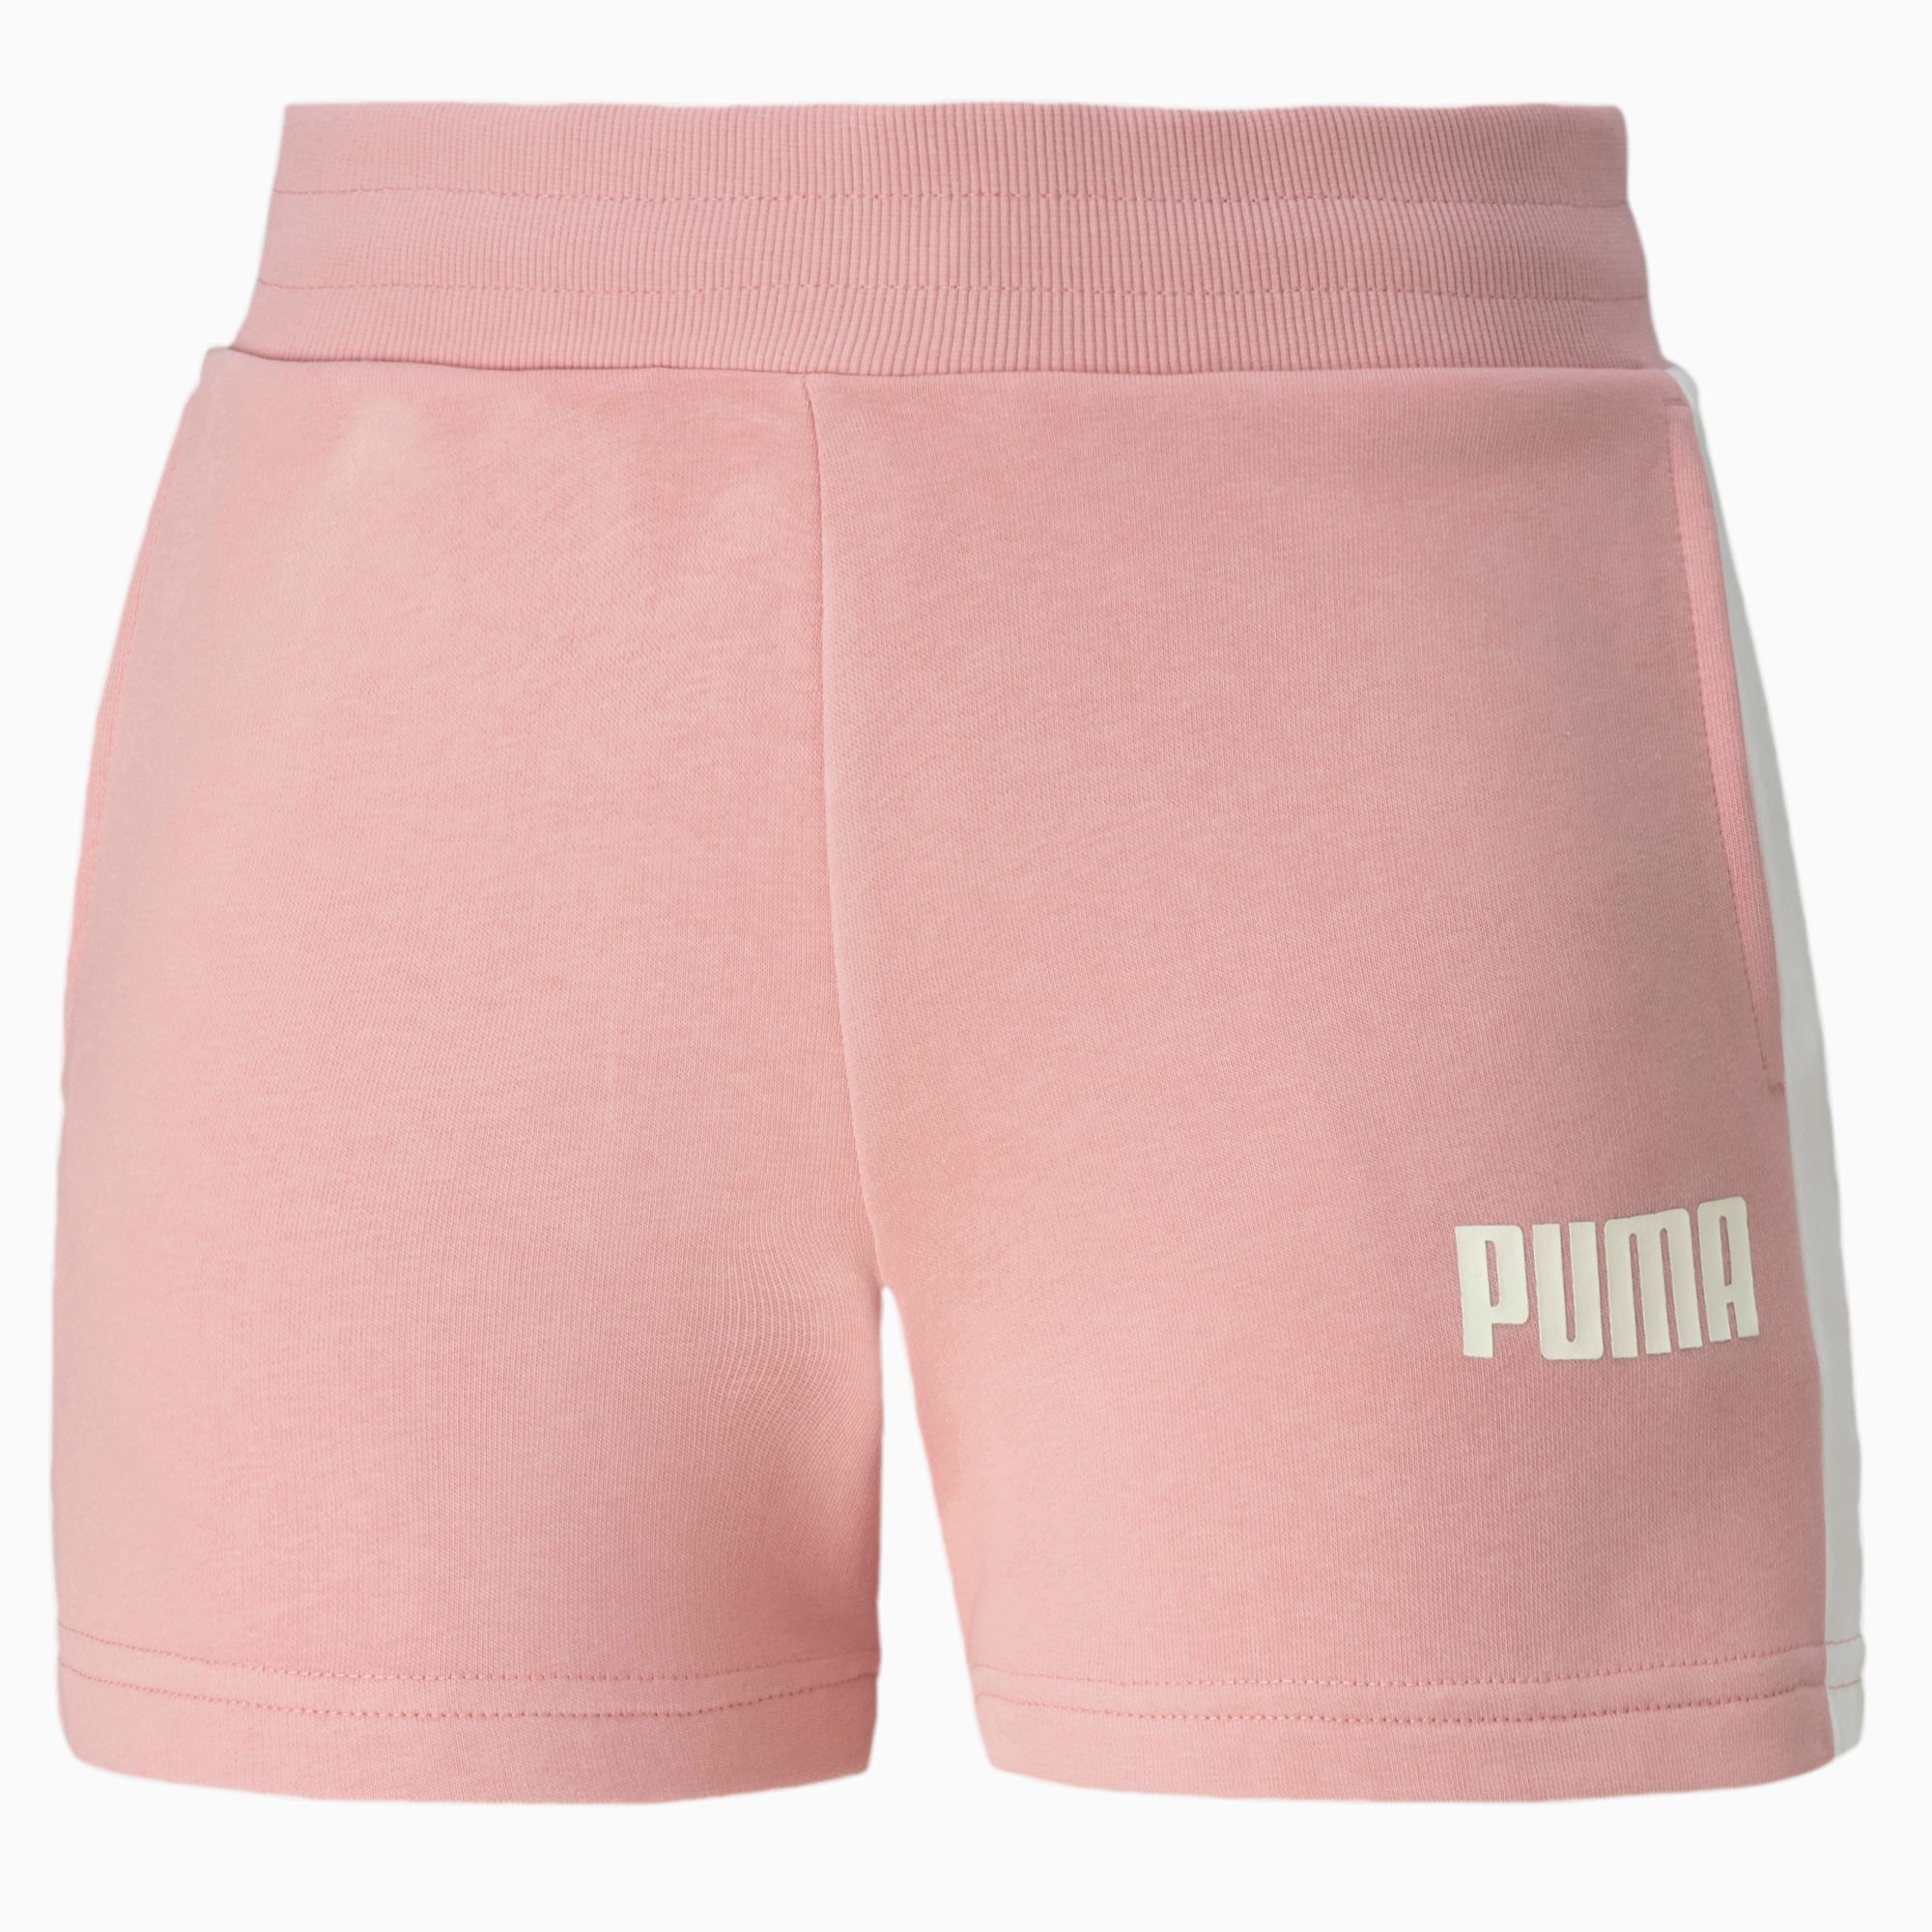 puma shorts womens